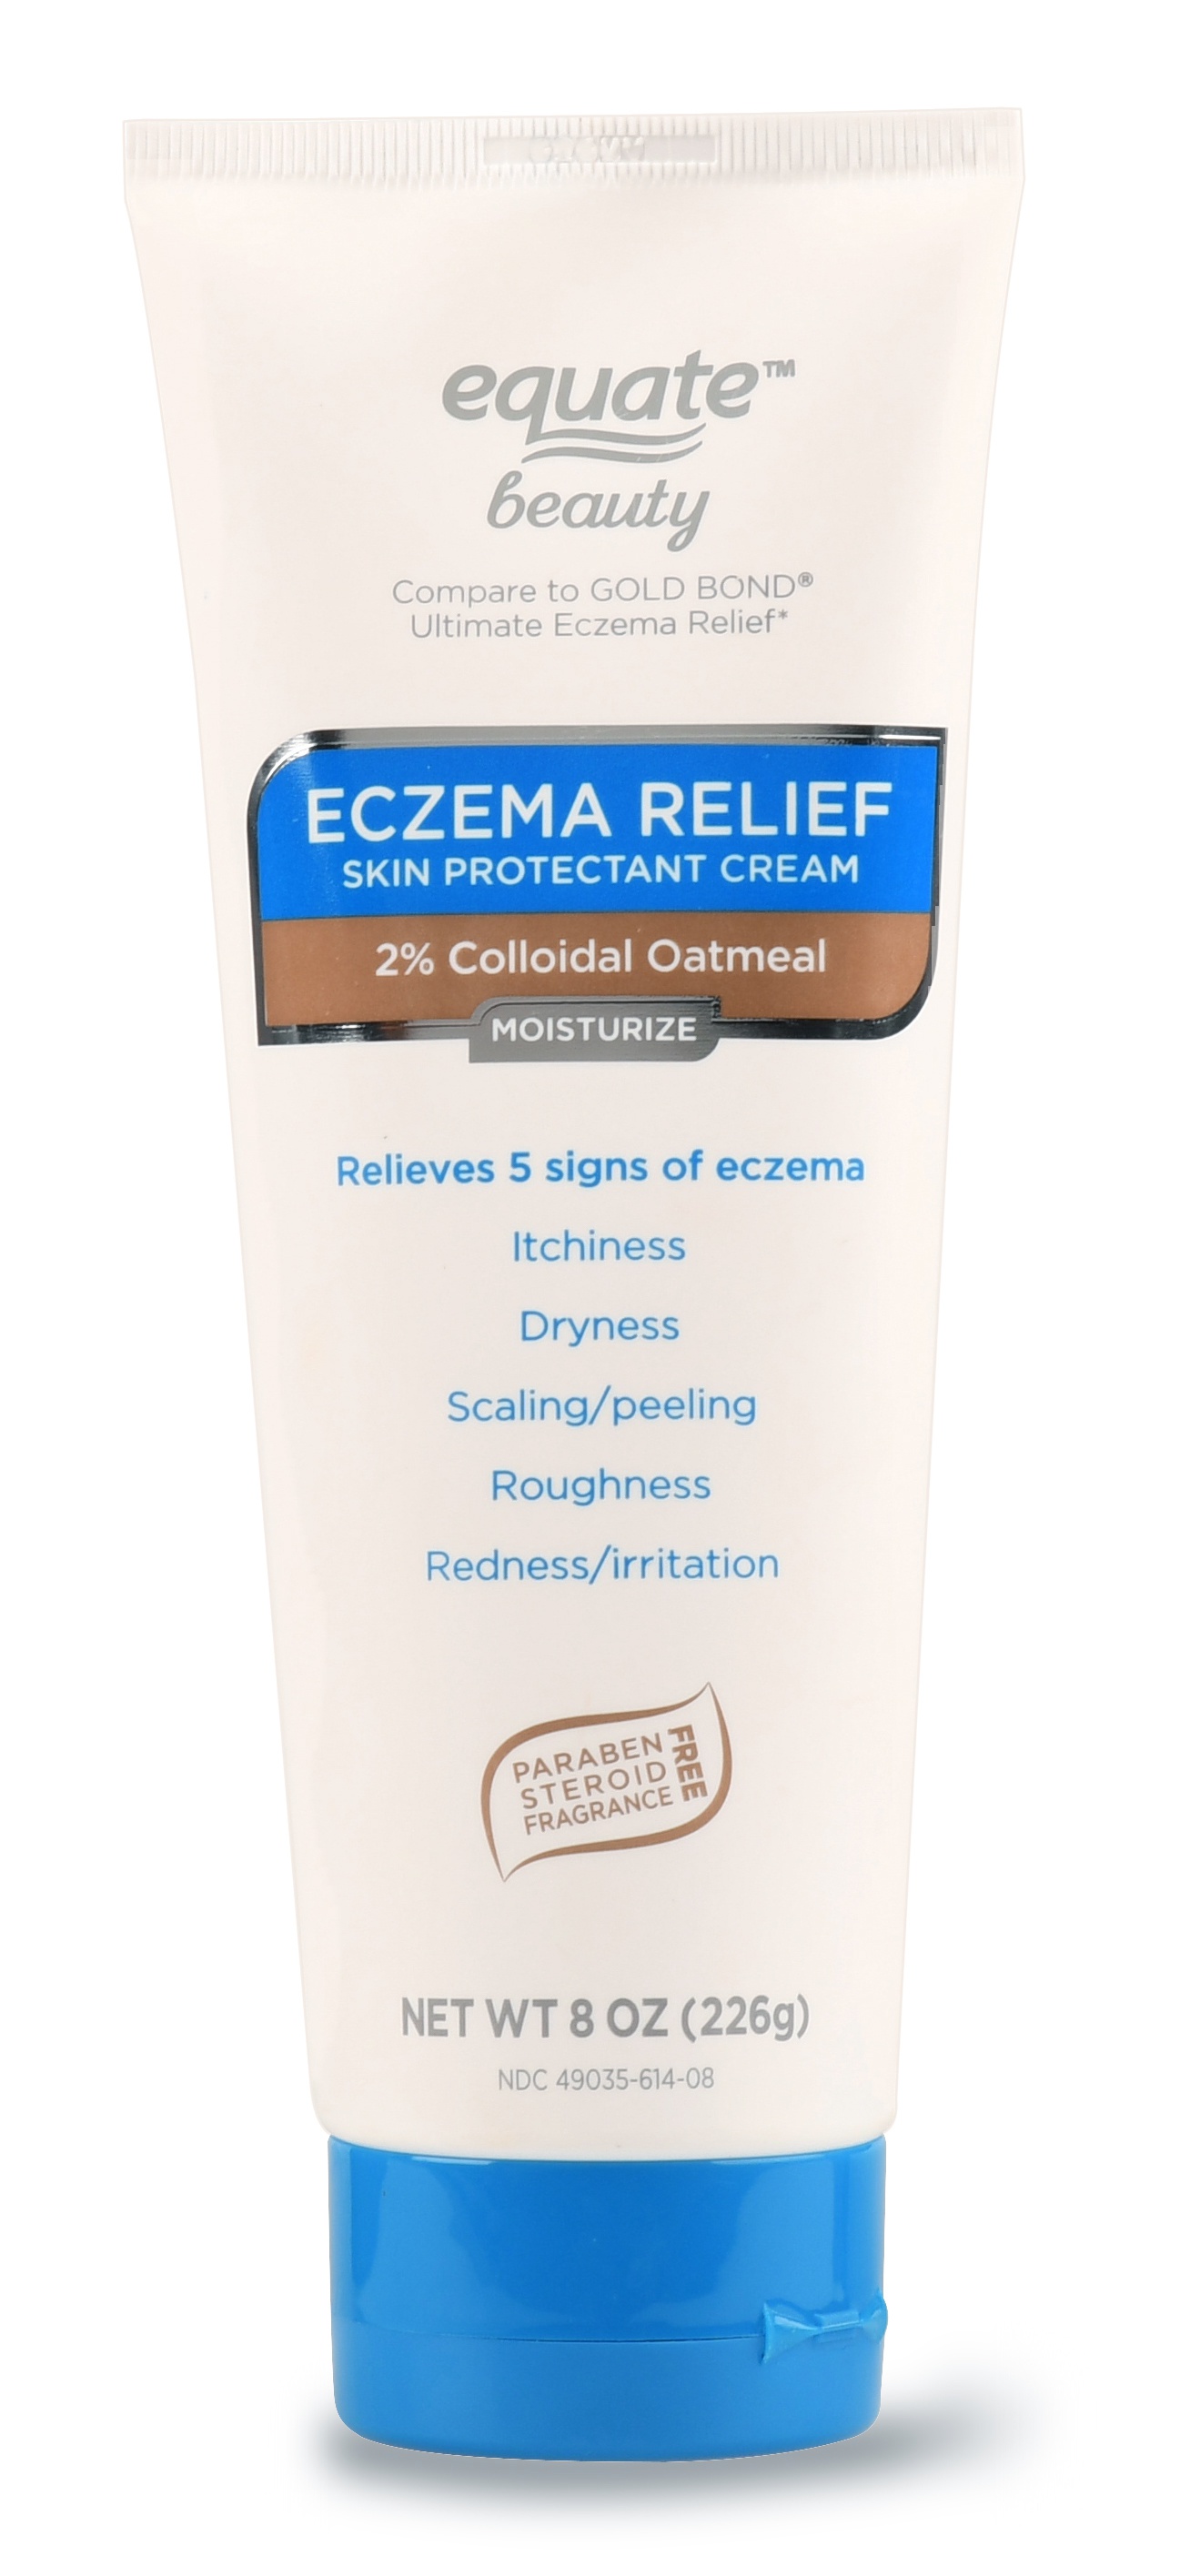 Equate Beauty Eczema Relief Skin Protectant Cream